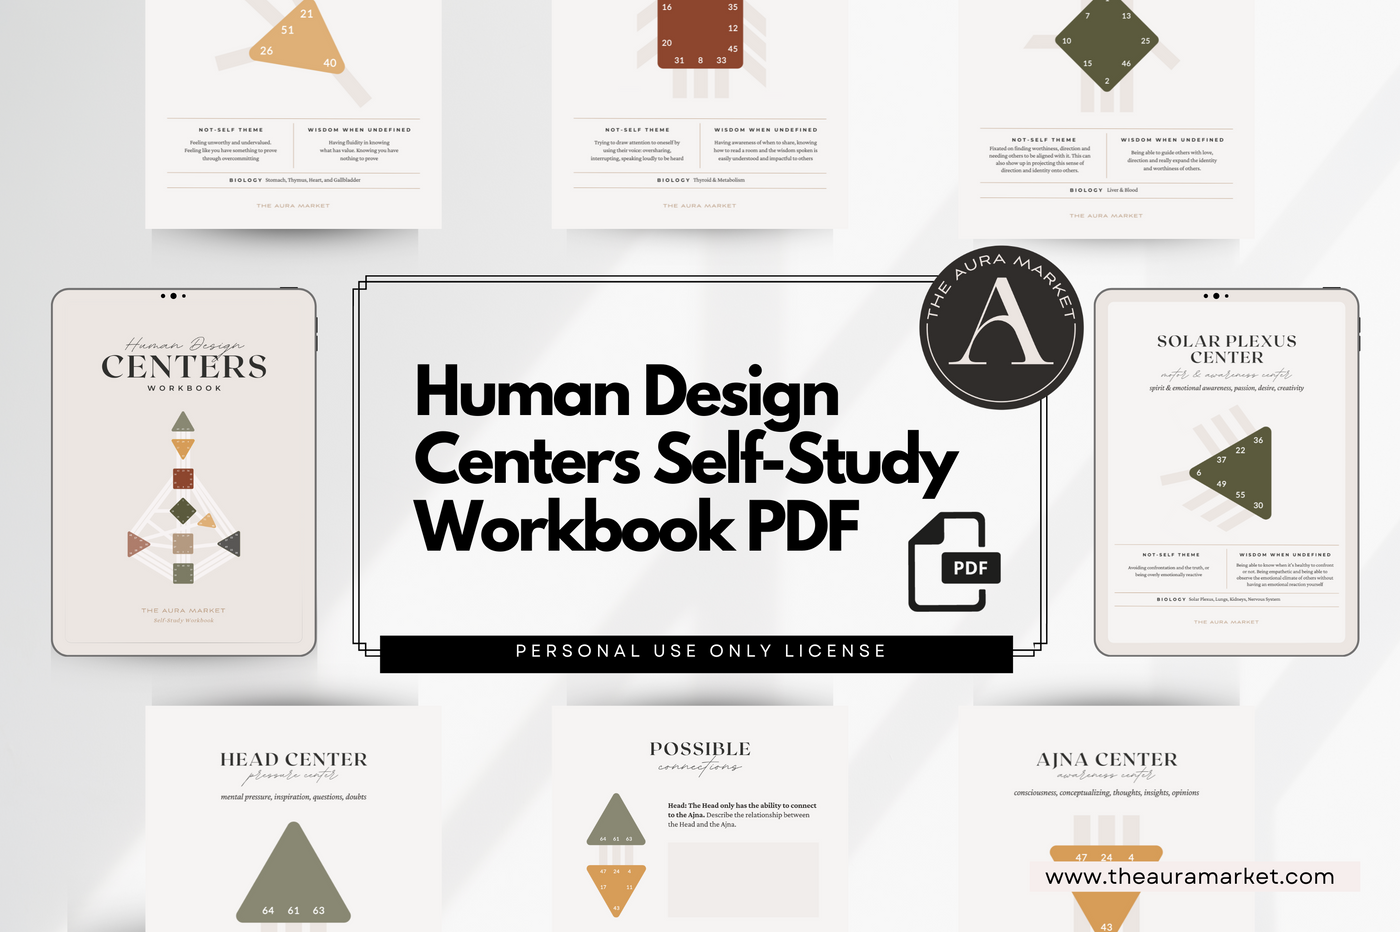 Human Design Centers Self-Study Workbook PDF